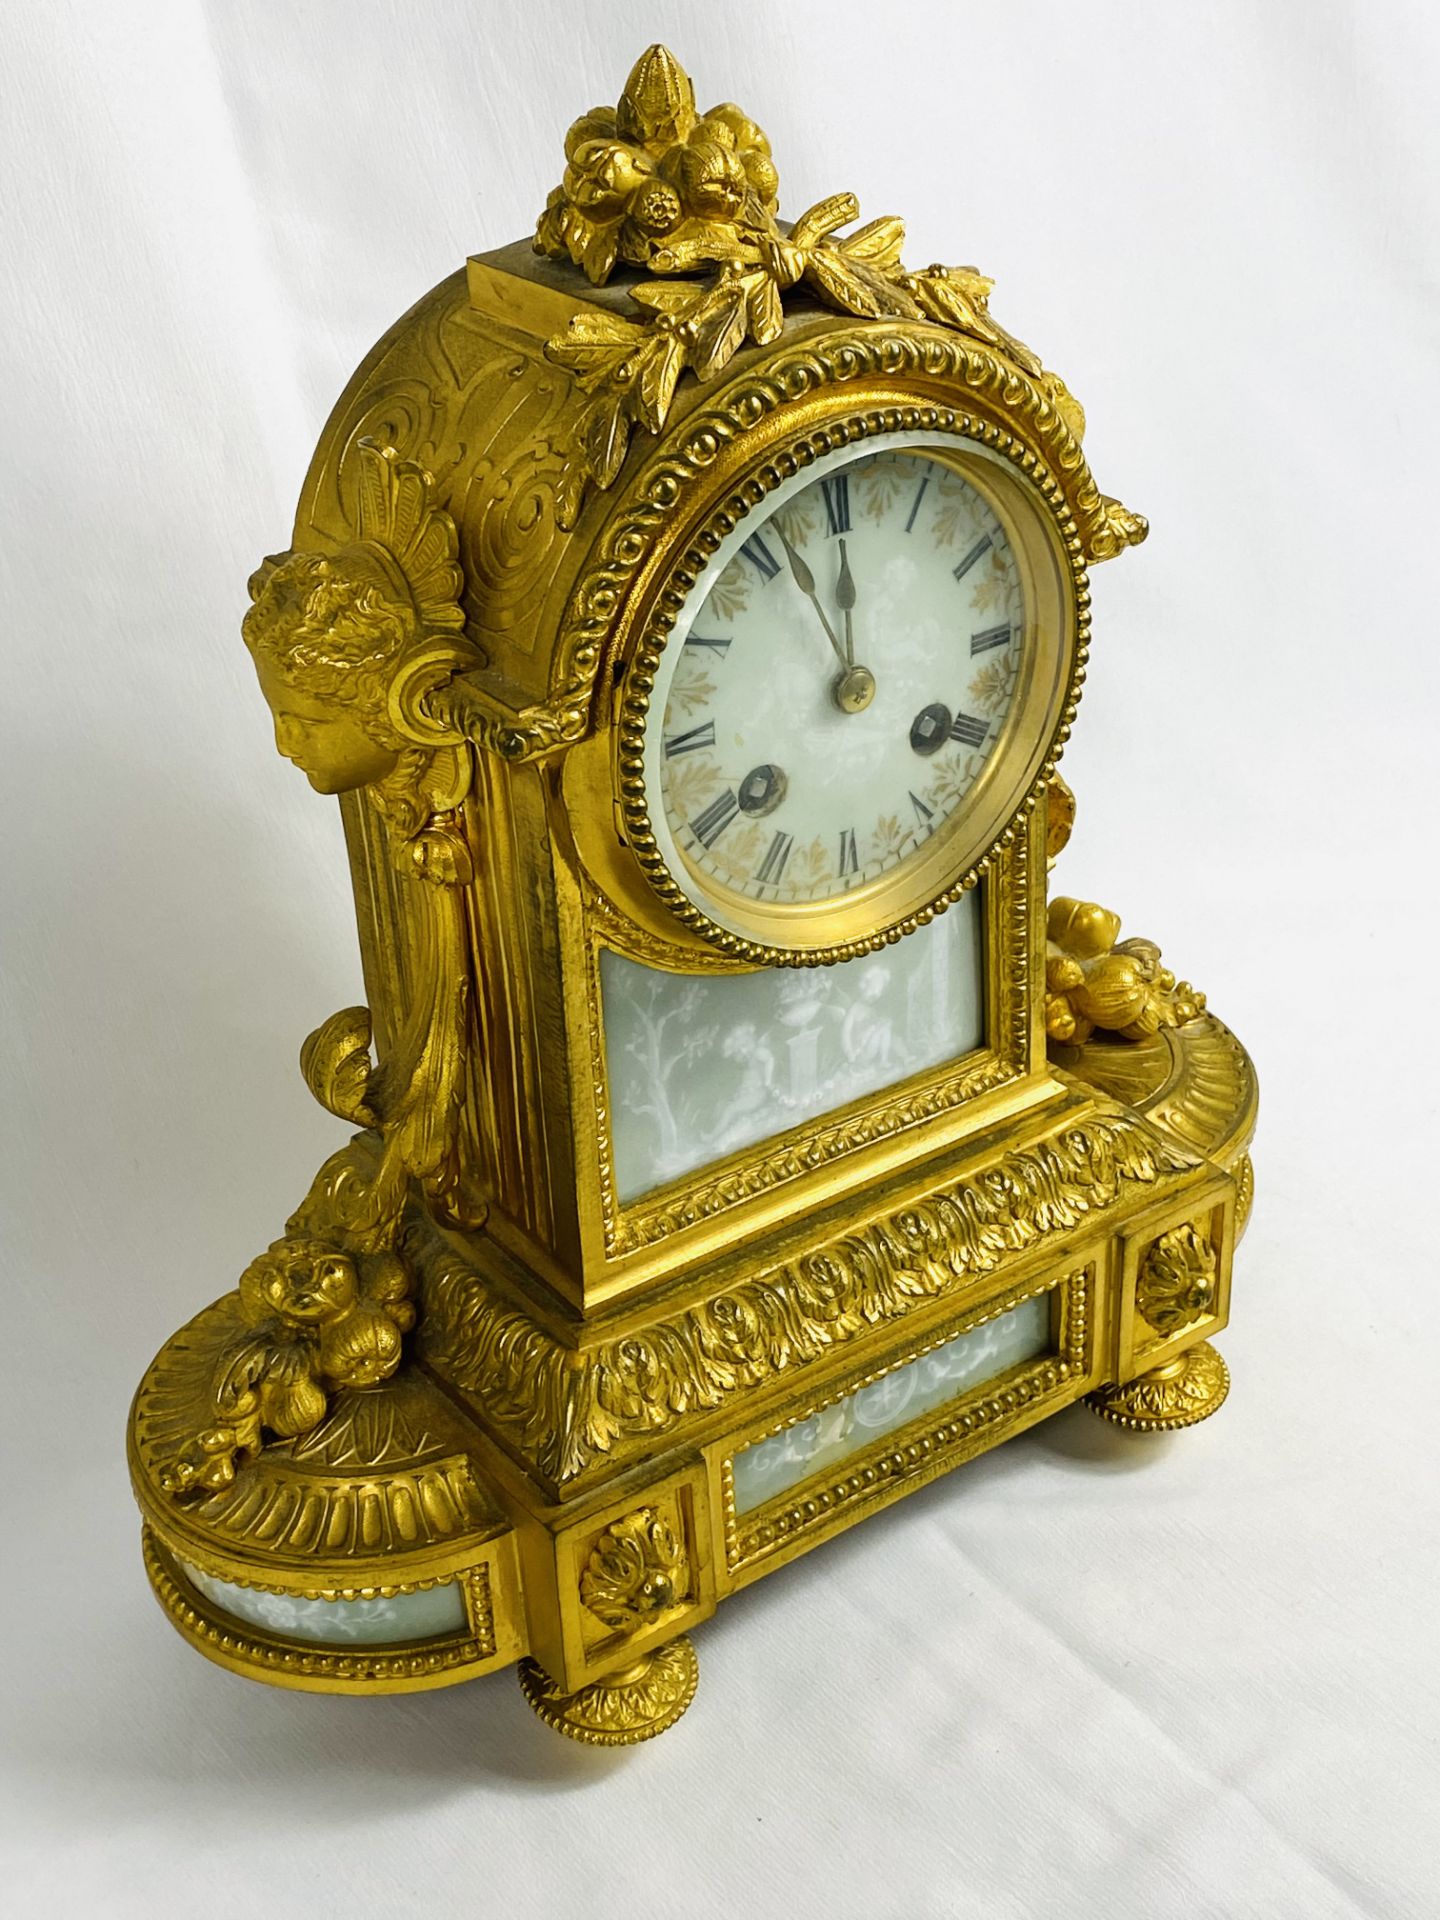 French ormolu mantel clock - Image 2 of 4